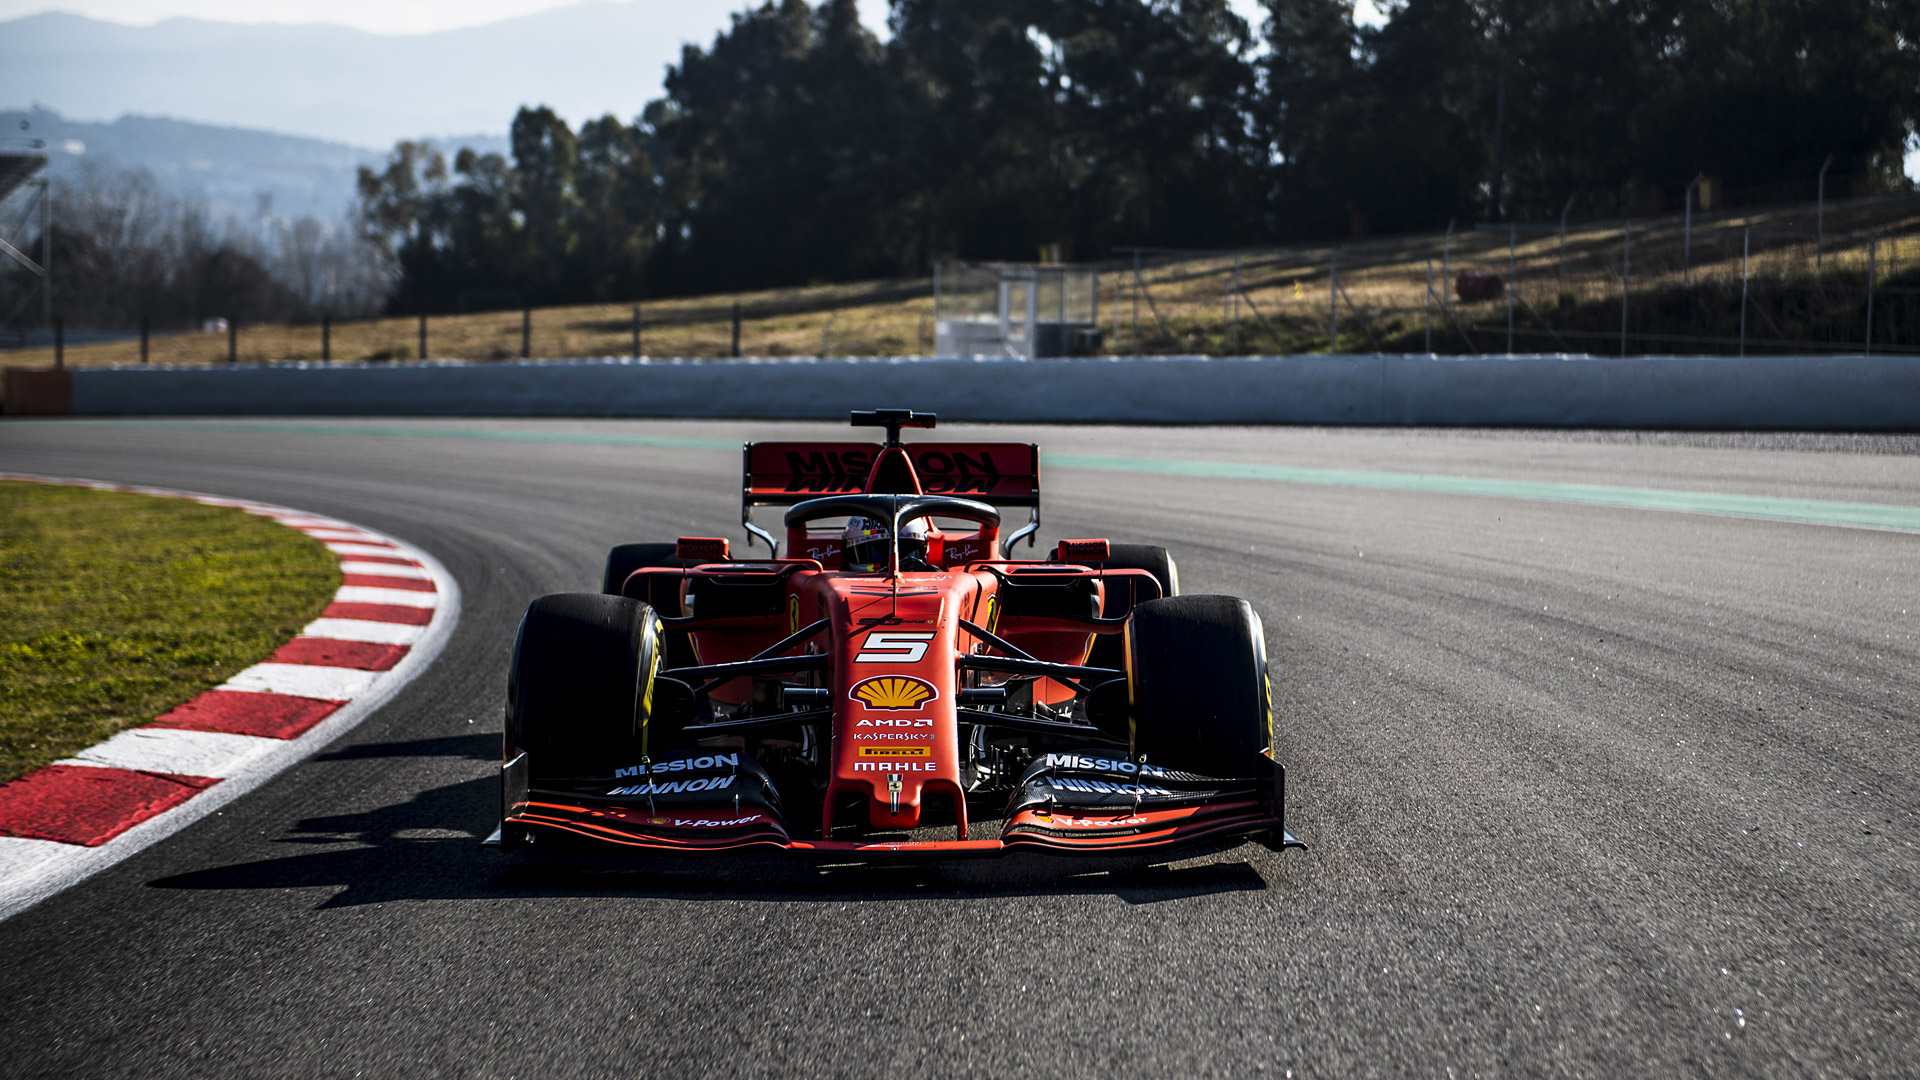 2019 Ferrari Sf90 Picture - Ferrari F1 2019 On Track , HD Wallpaper & Backgrounds